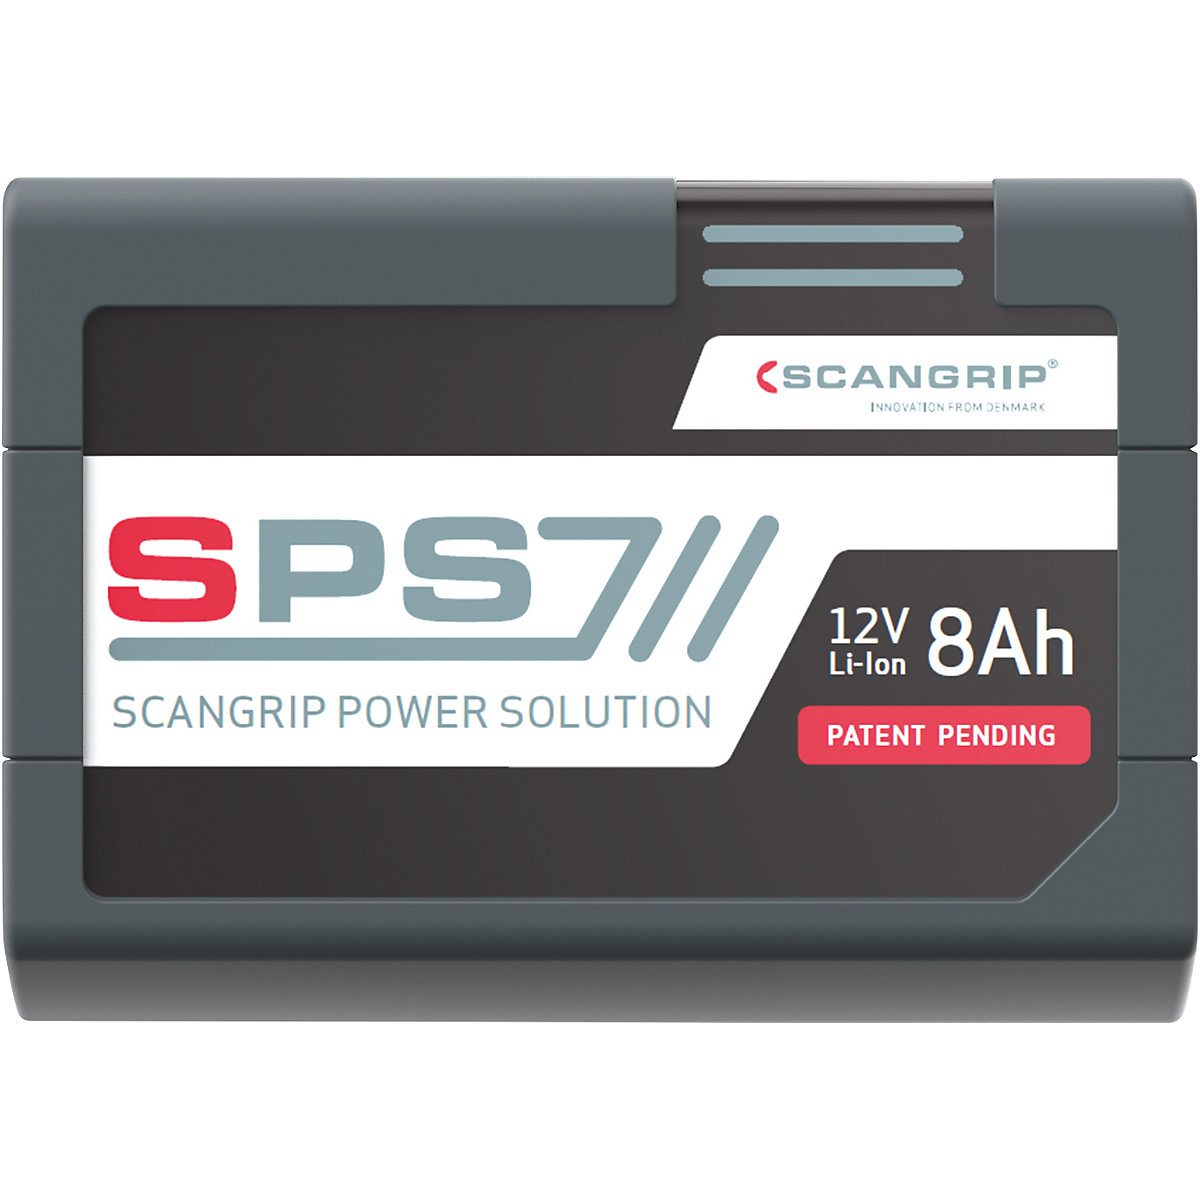 Acumulator de schimb pentru SCANGRIP NOVA SPS - SCANGRIP